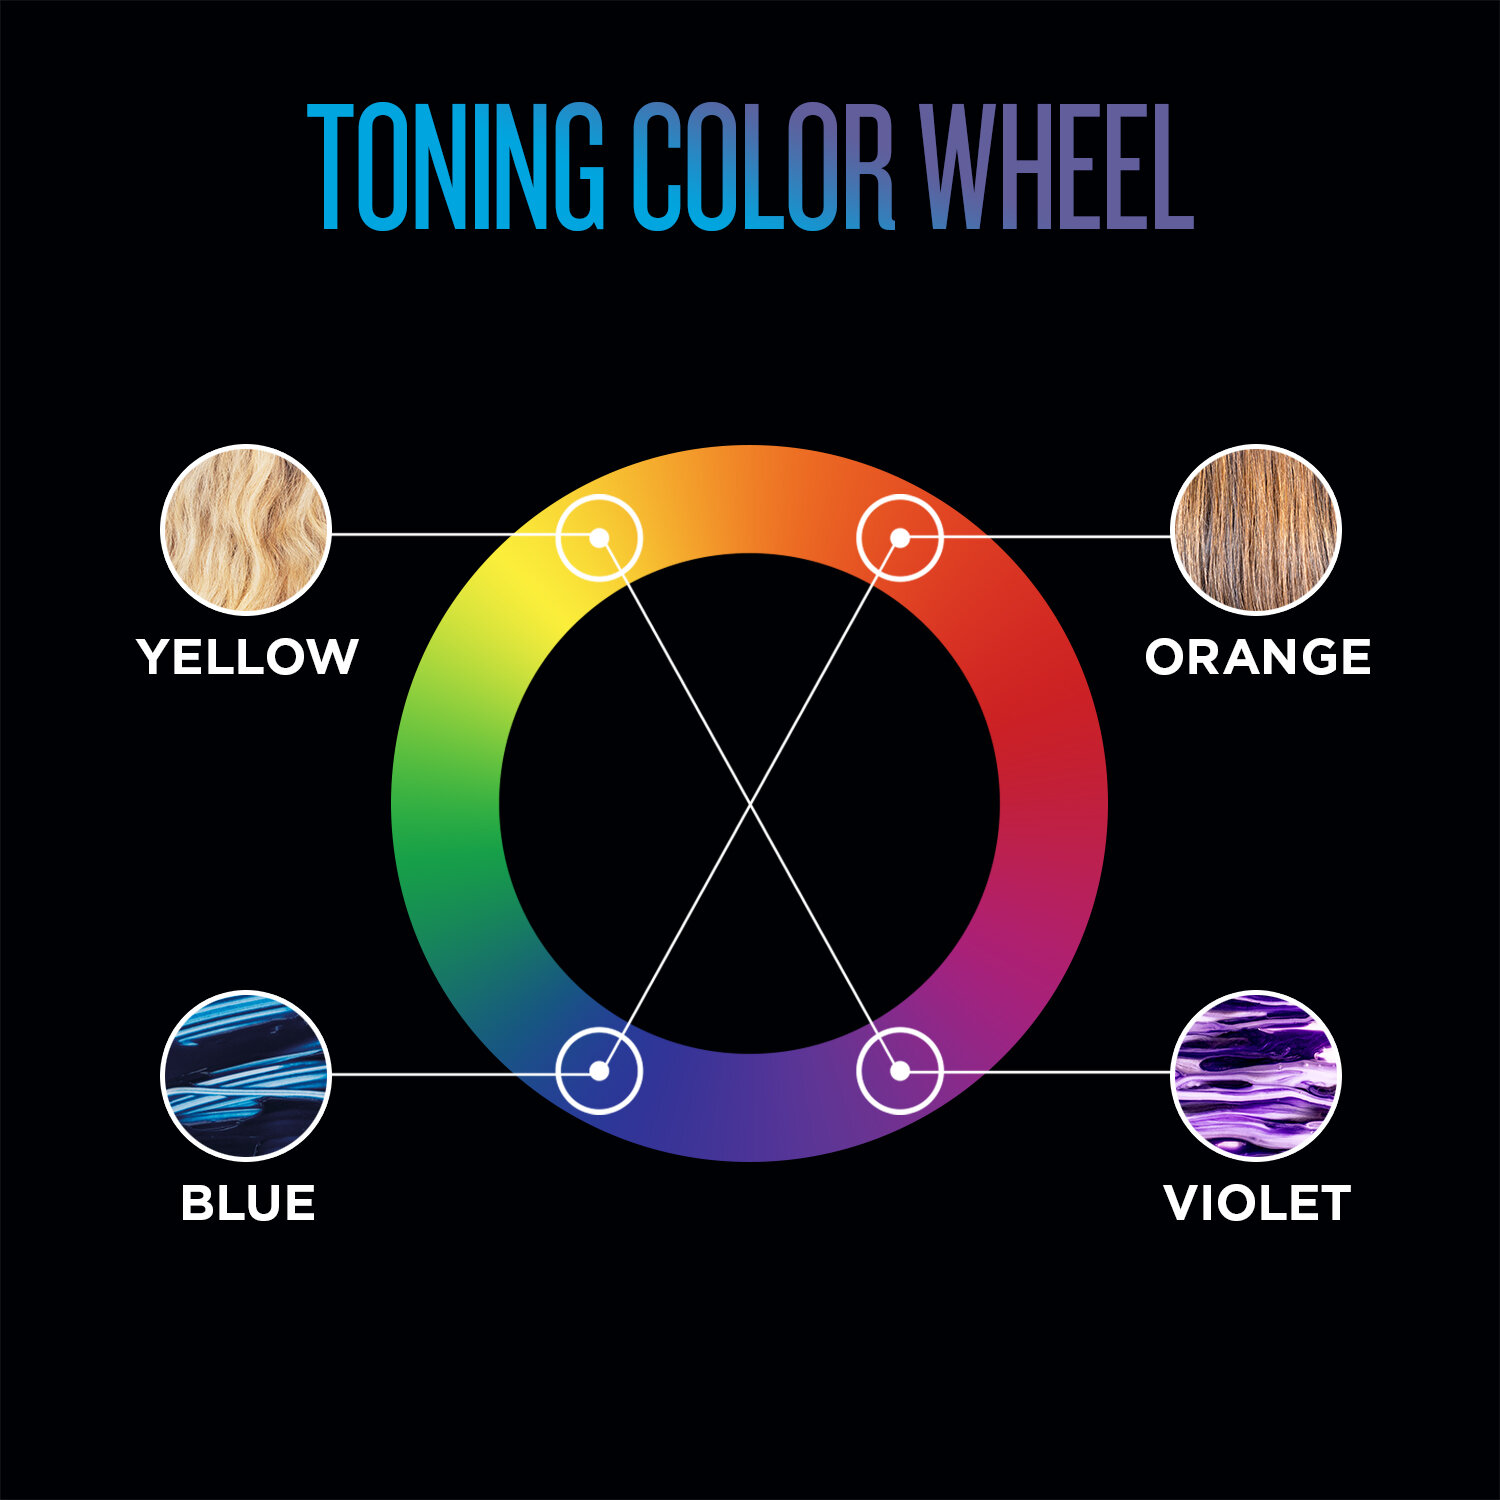 Redken-2020-US-Amazon-Color-Care-Wheel-Tile-1500x1500.jpg